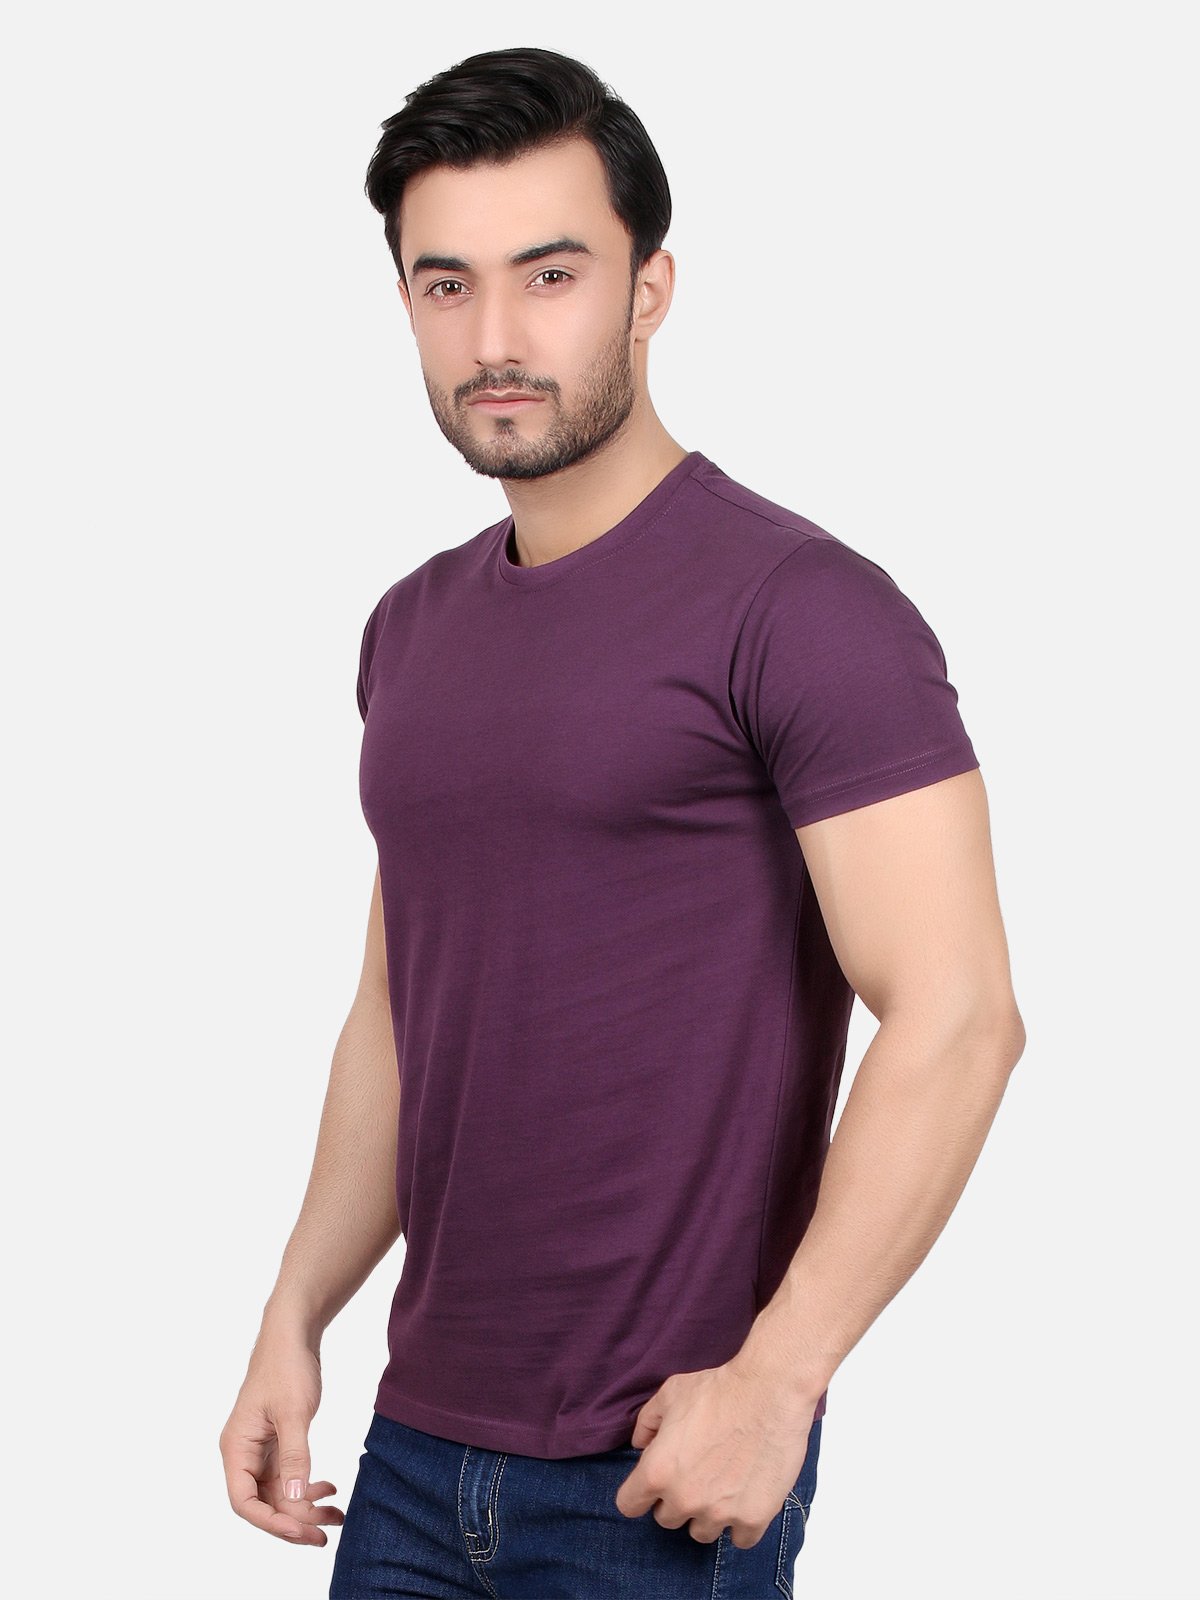 Men's Purple Basic T-Shirt - FMTBT19-065